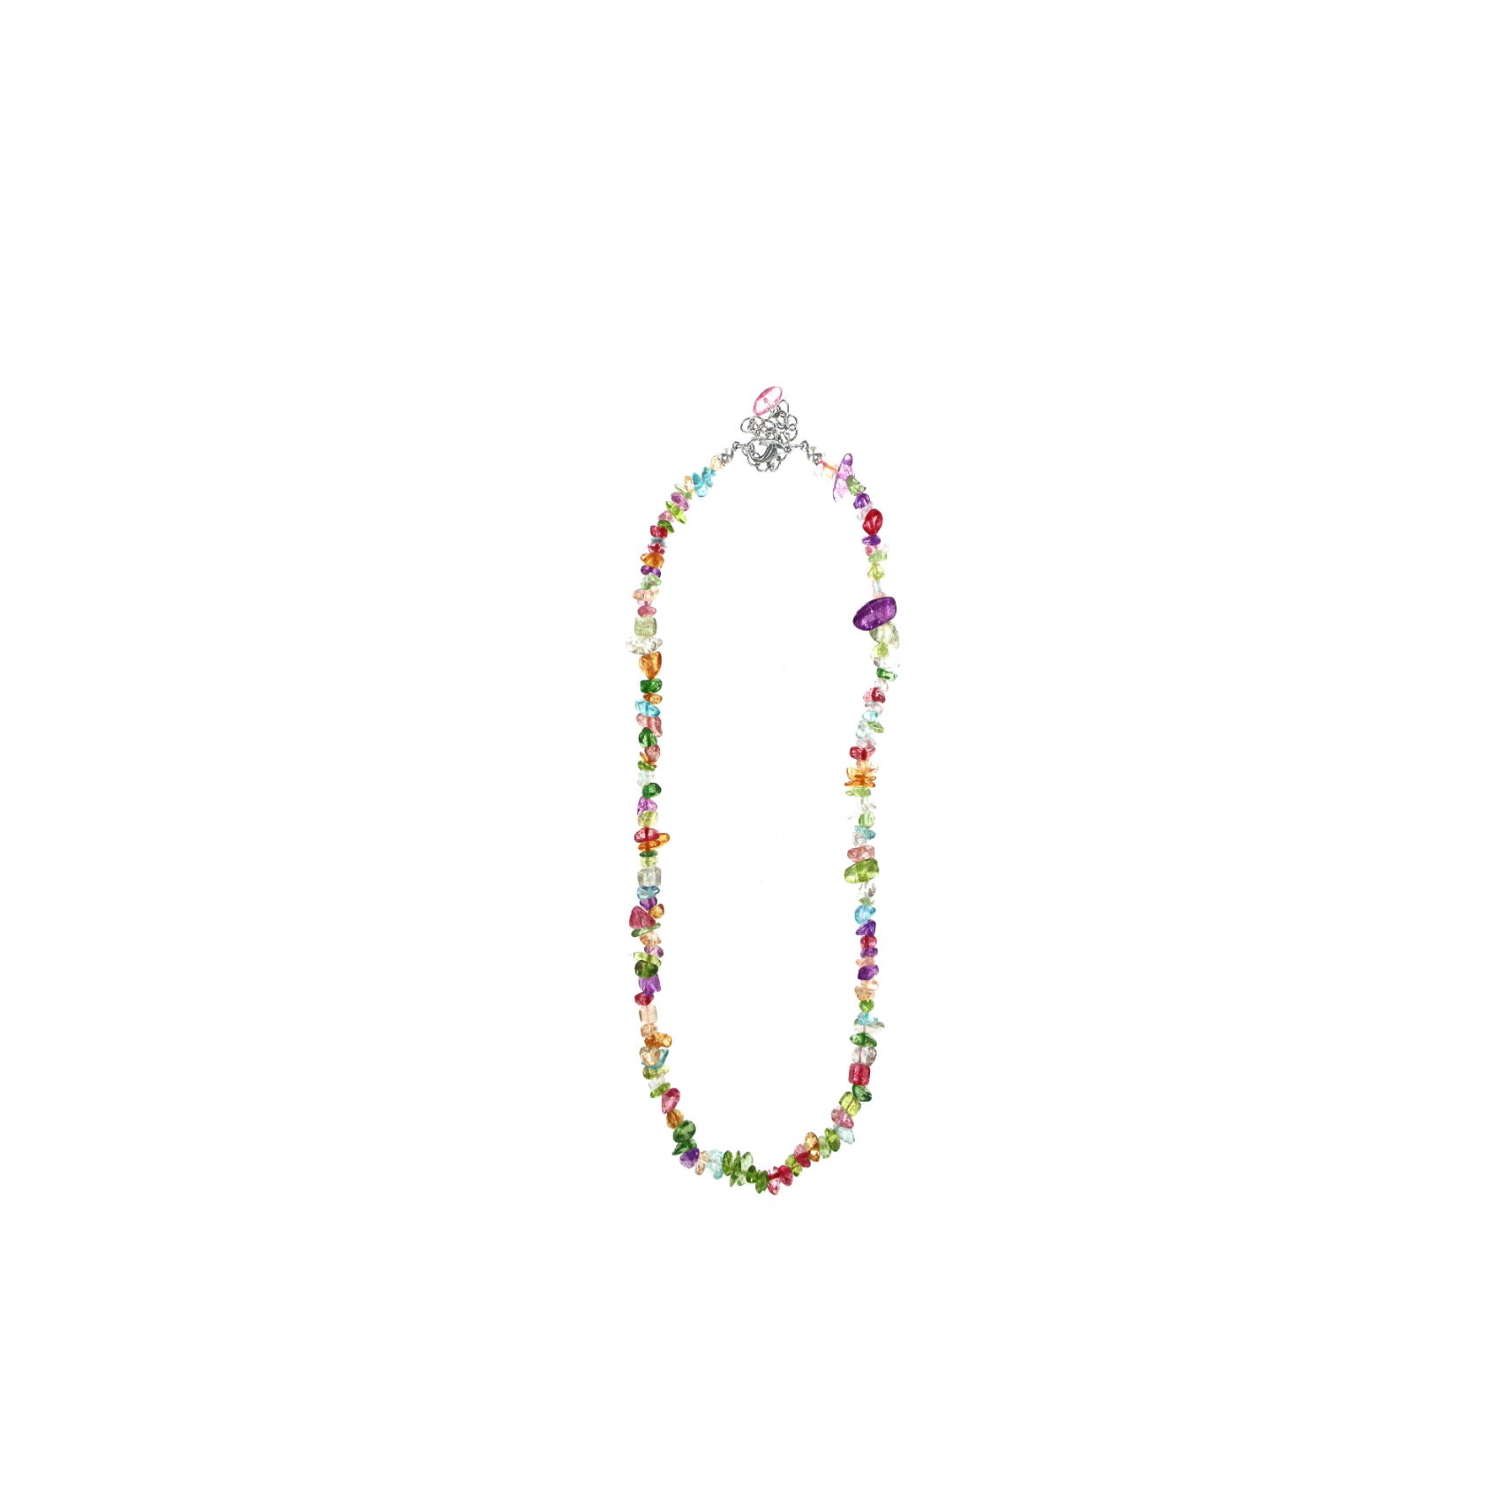 Multicoloured stone chip gemstone necklace.